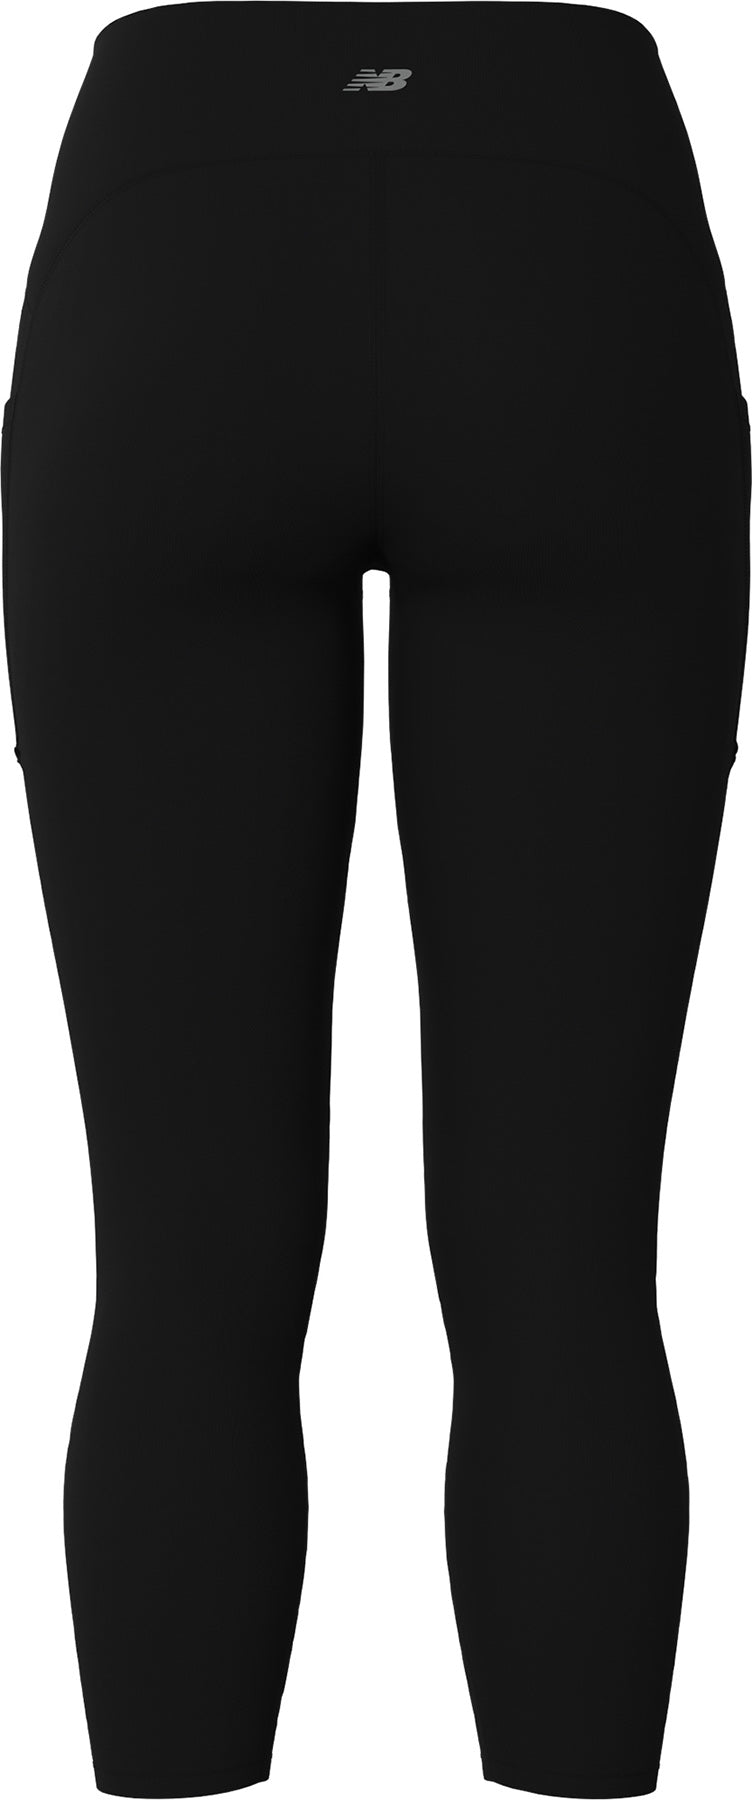 New Balance Ladies Legging XL (SK5663), Women's Fashion, Bottoms